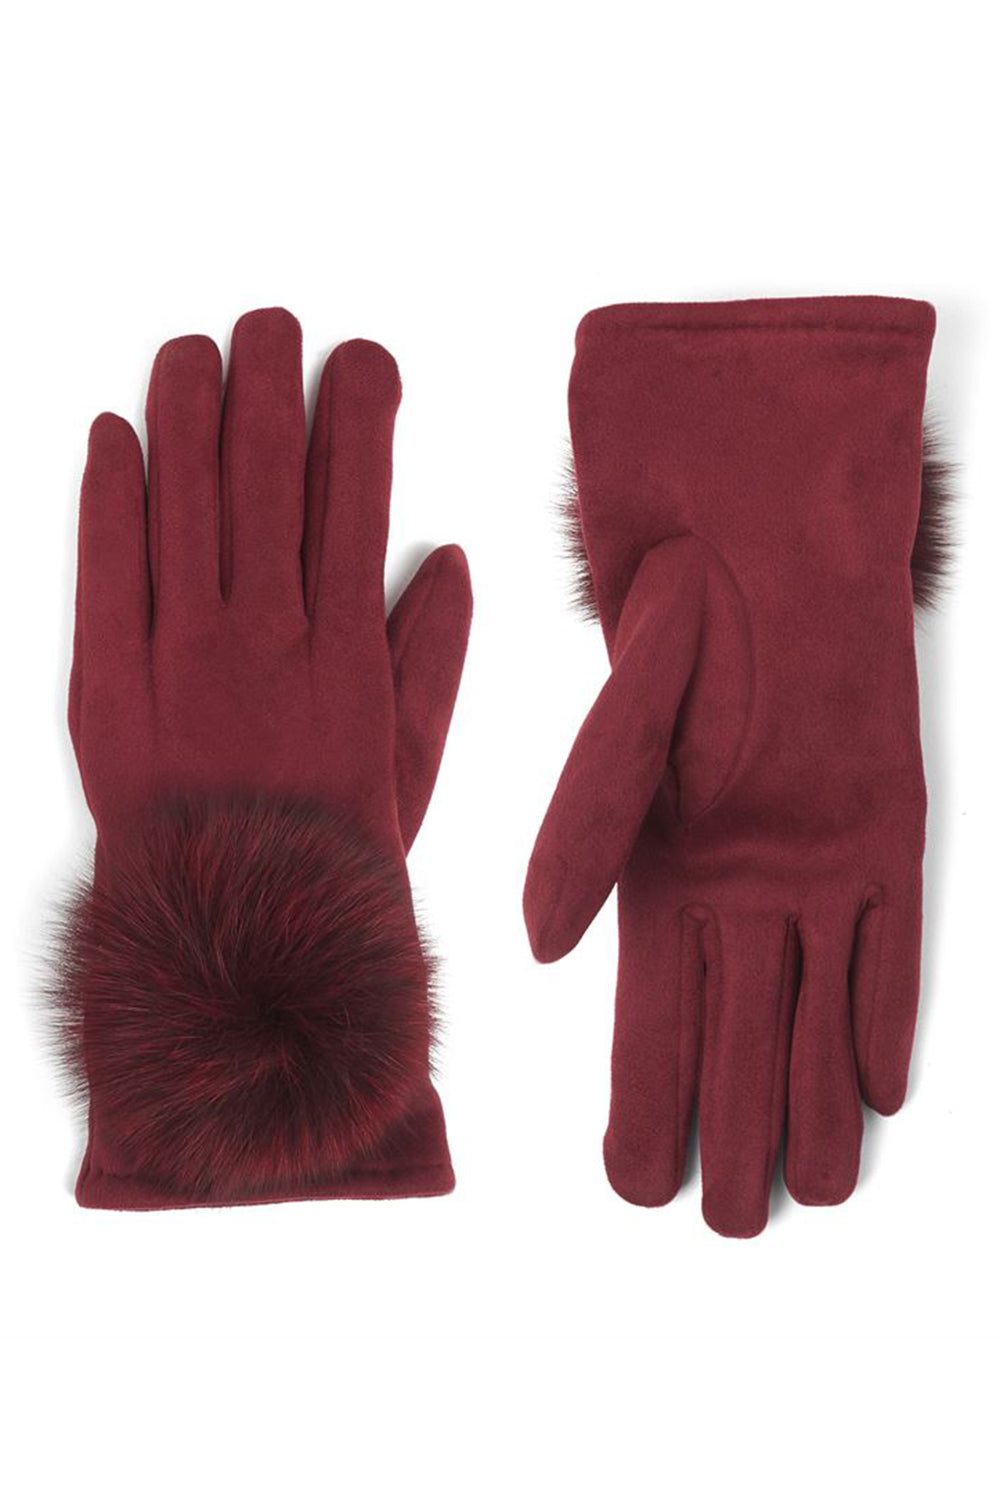 Microsuede Touchscreen Gloves - Garnet Red